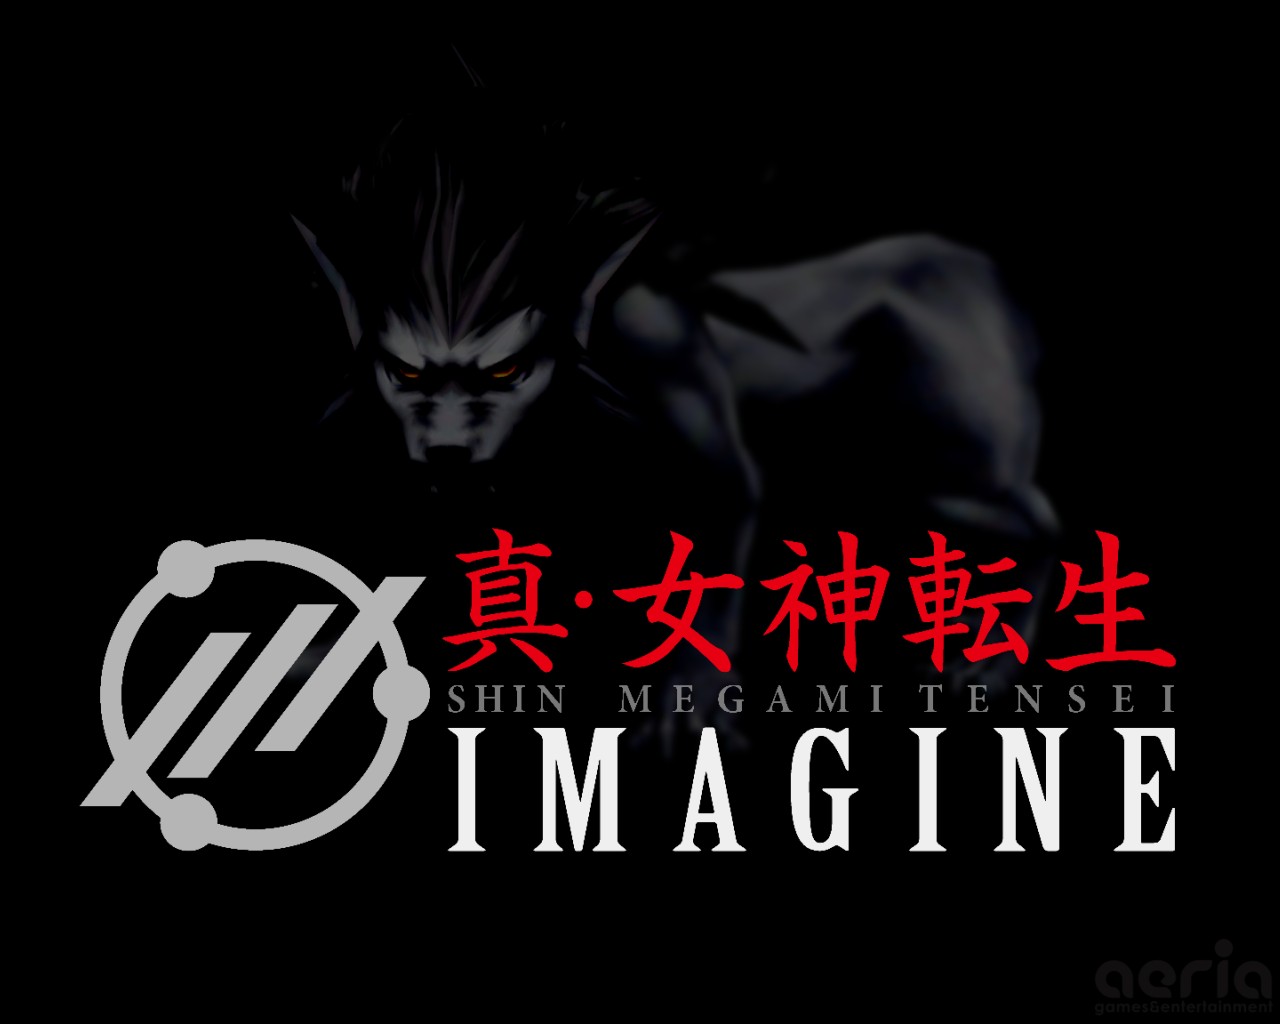 Shin Megami Tensei Online IMAGINE PC Wallpapers fonds dcran